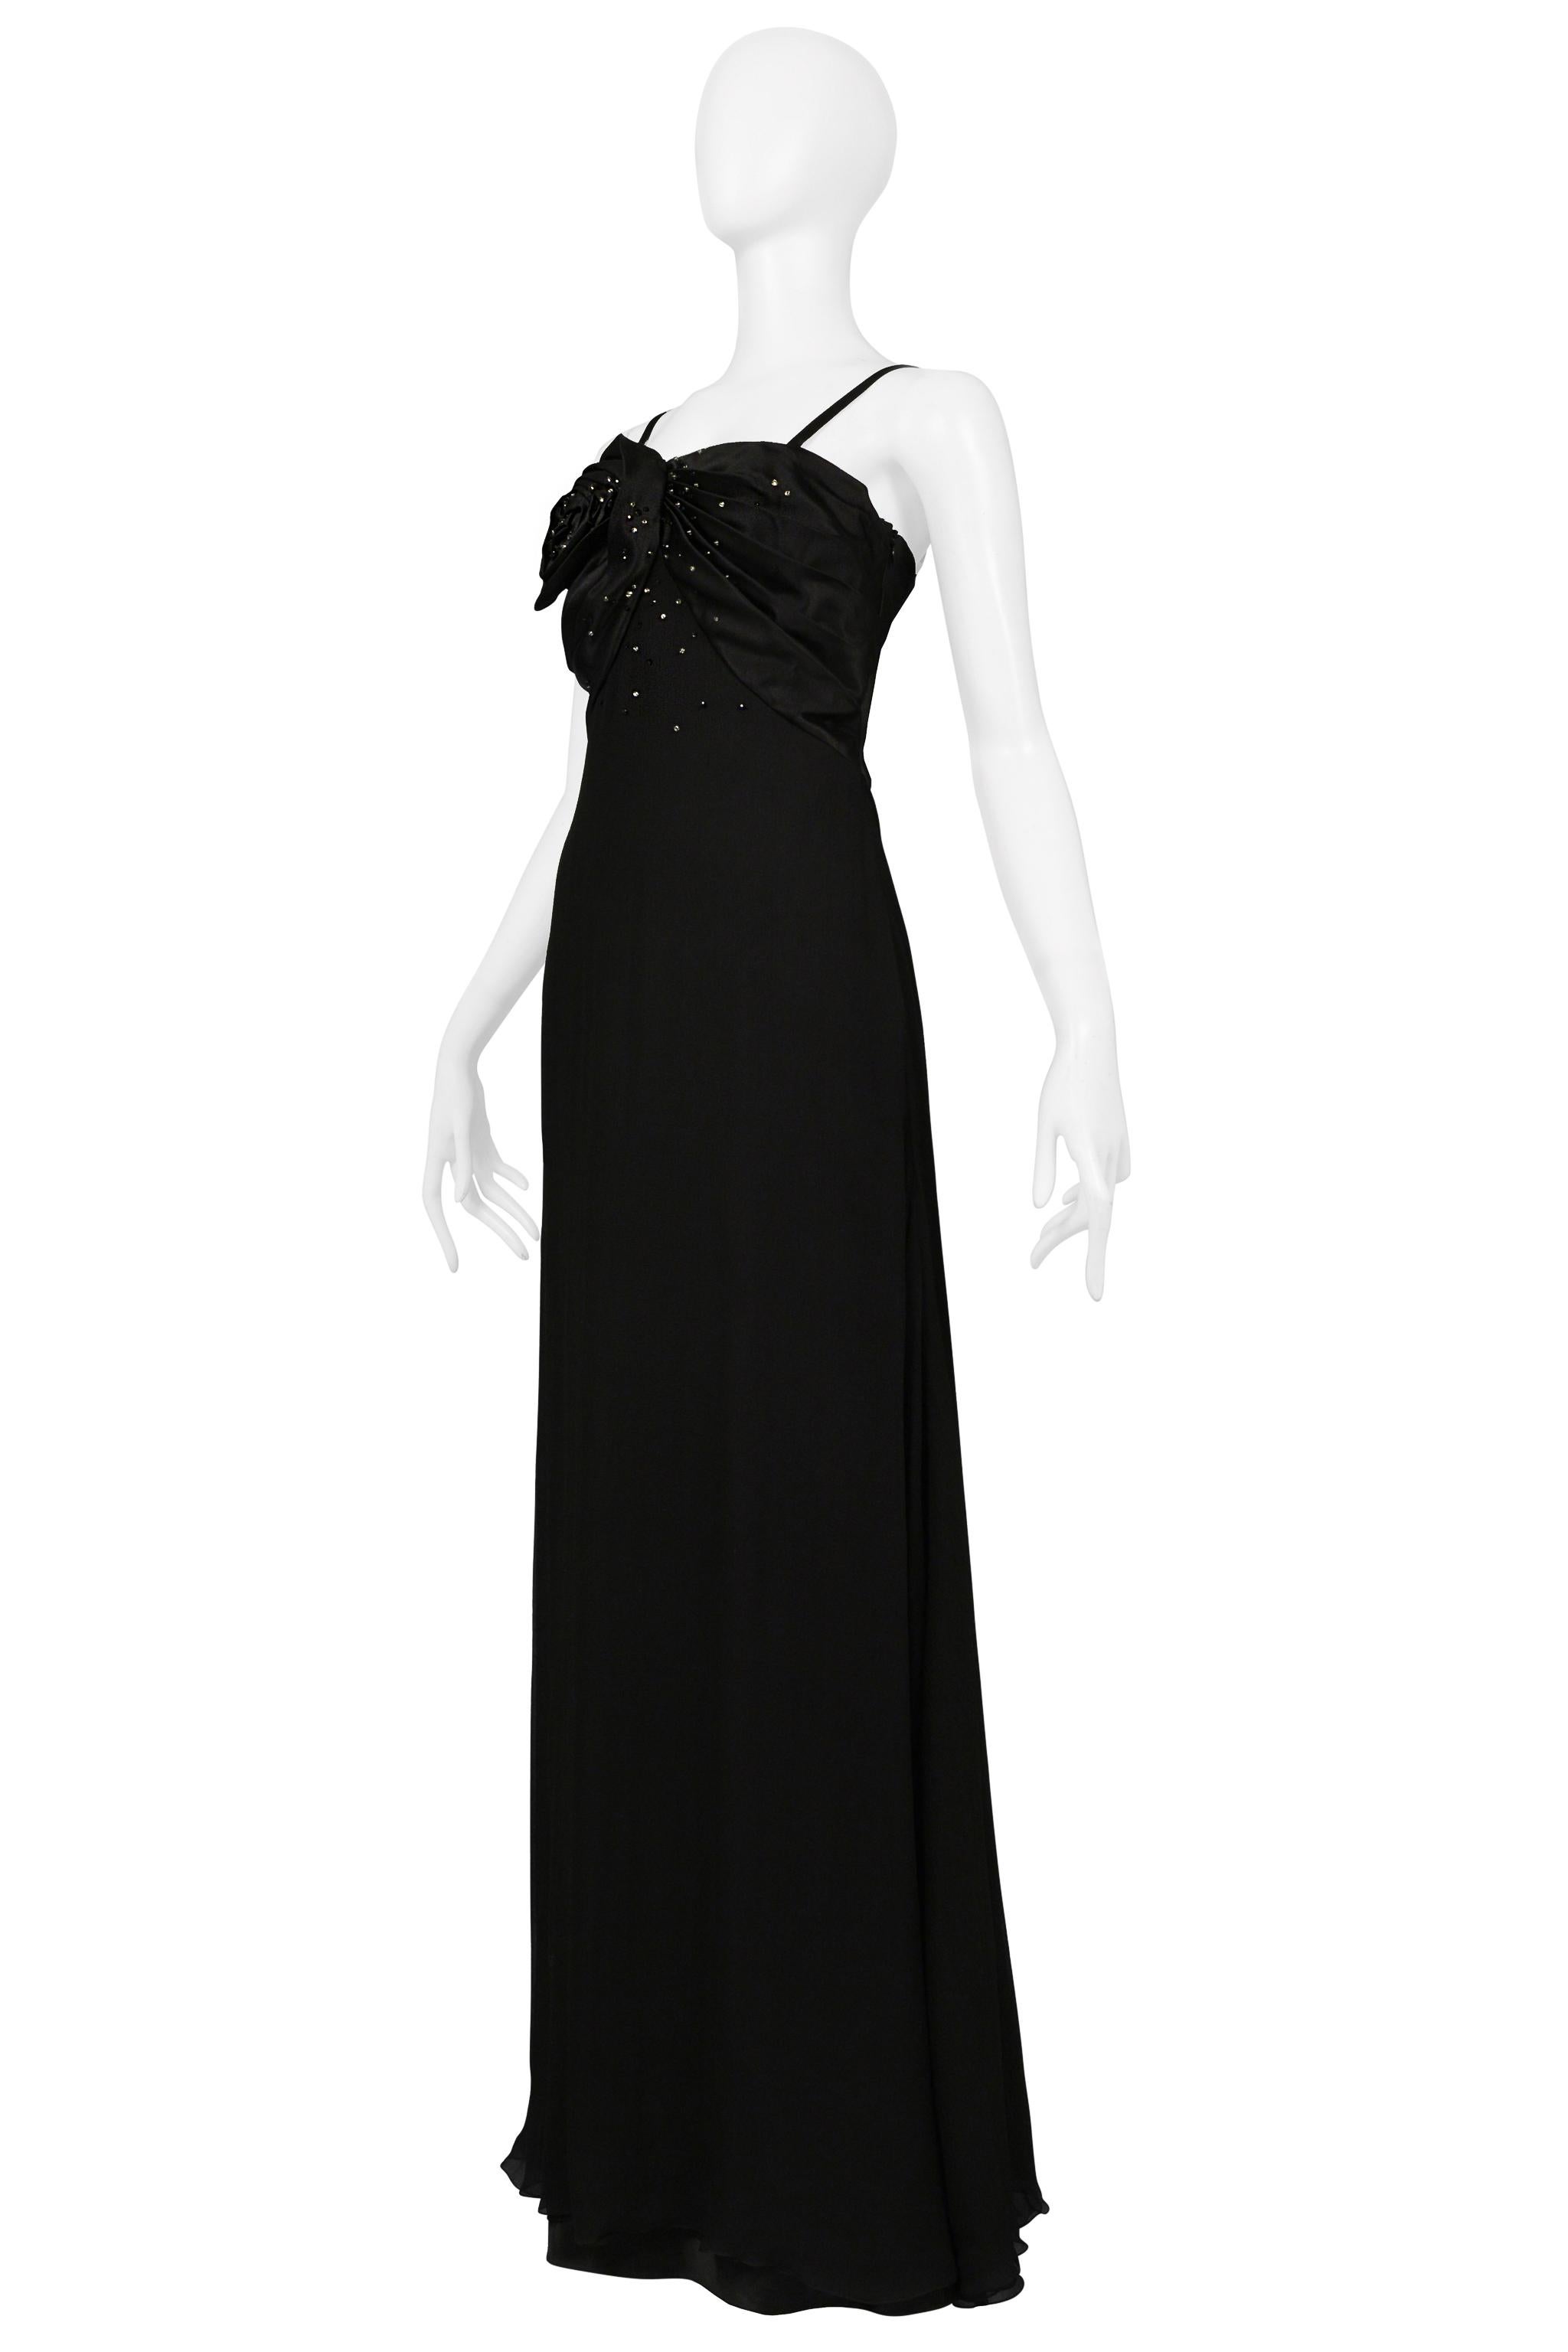 Christian Dior By John Galliano Black Gown W/ Rosettes & Rhinestones 2008 Resort For Sale 1